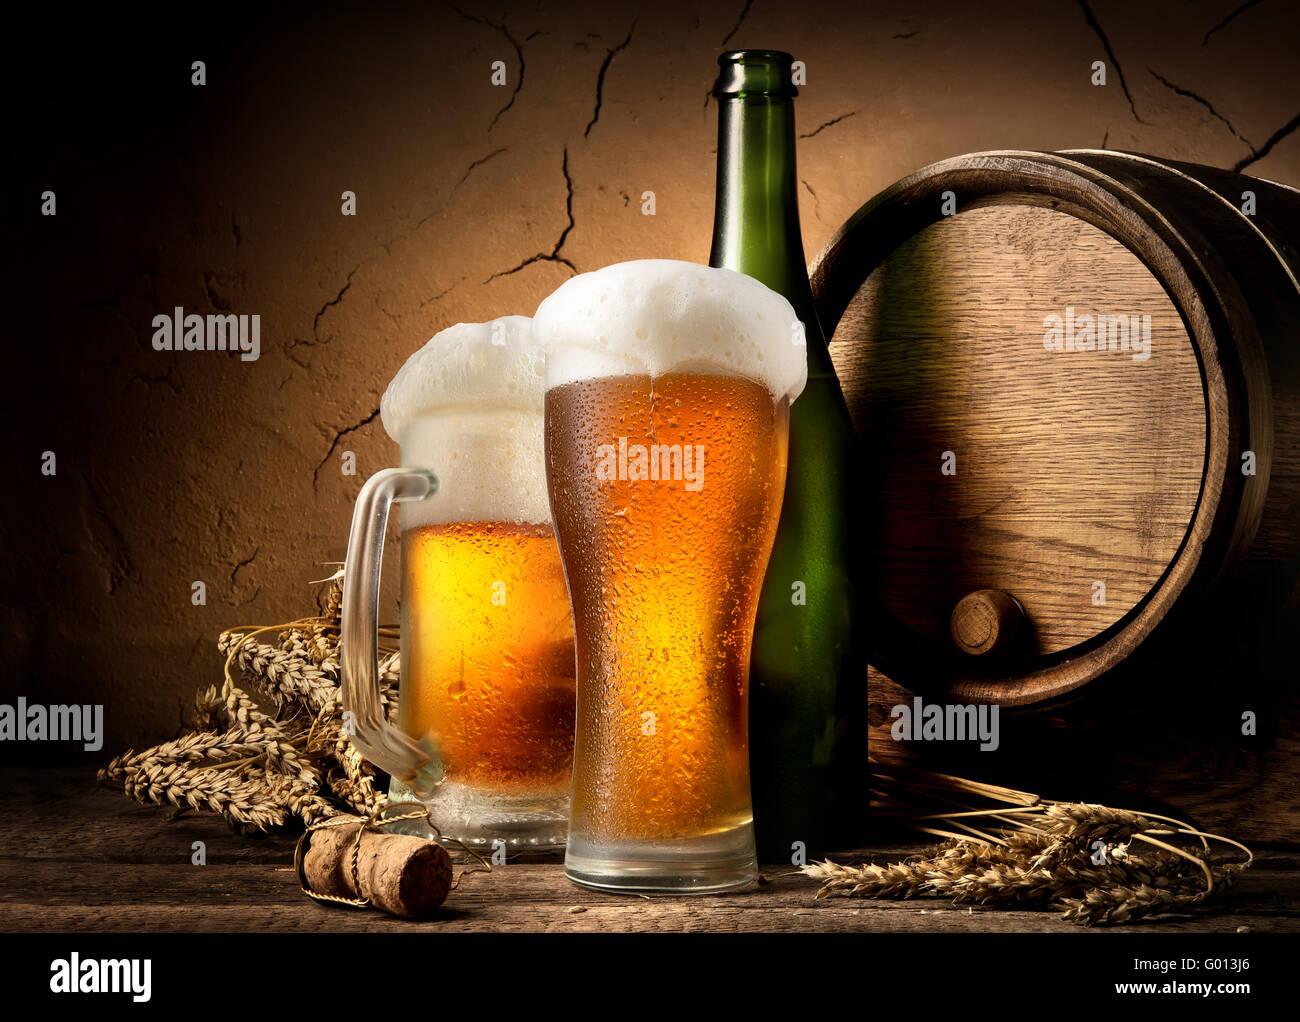 https://c8.alamy.com/comp/G013J6/beer-on-table-of-cellar-in-brewery-G013J6.jpg